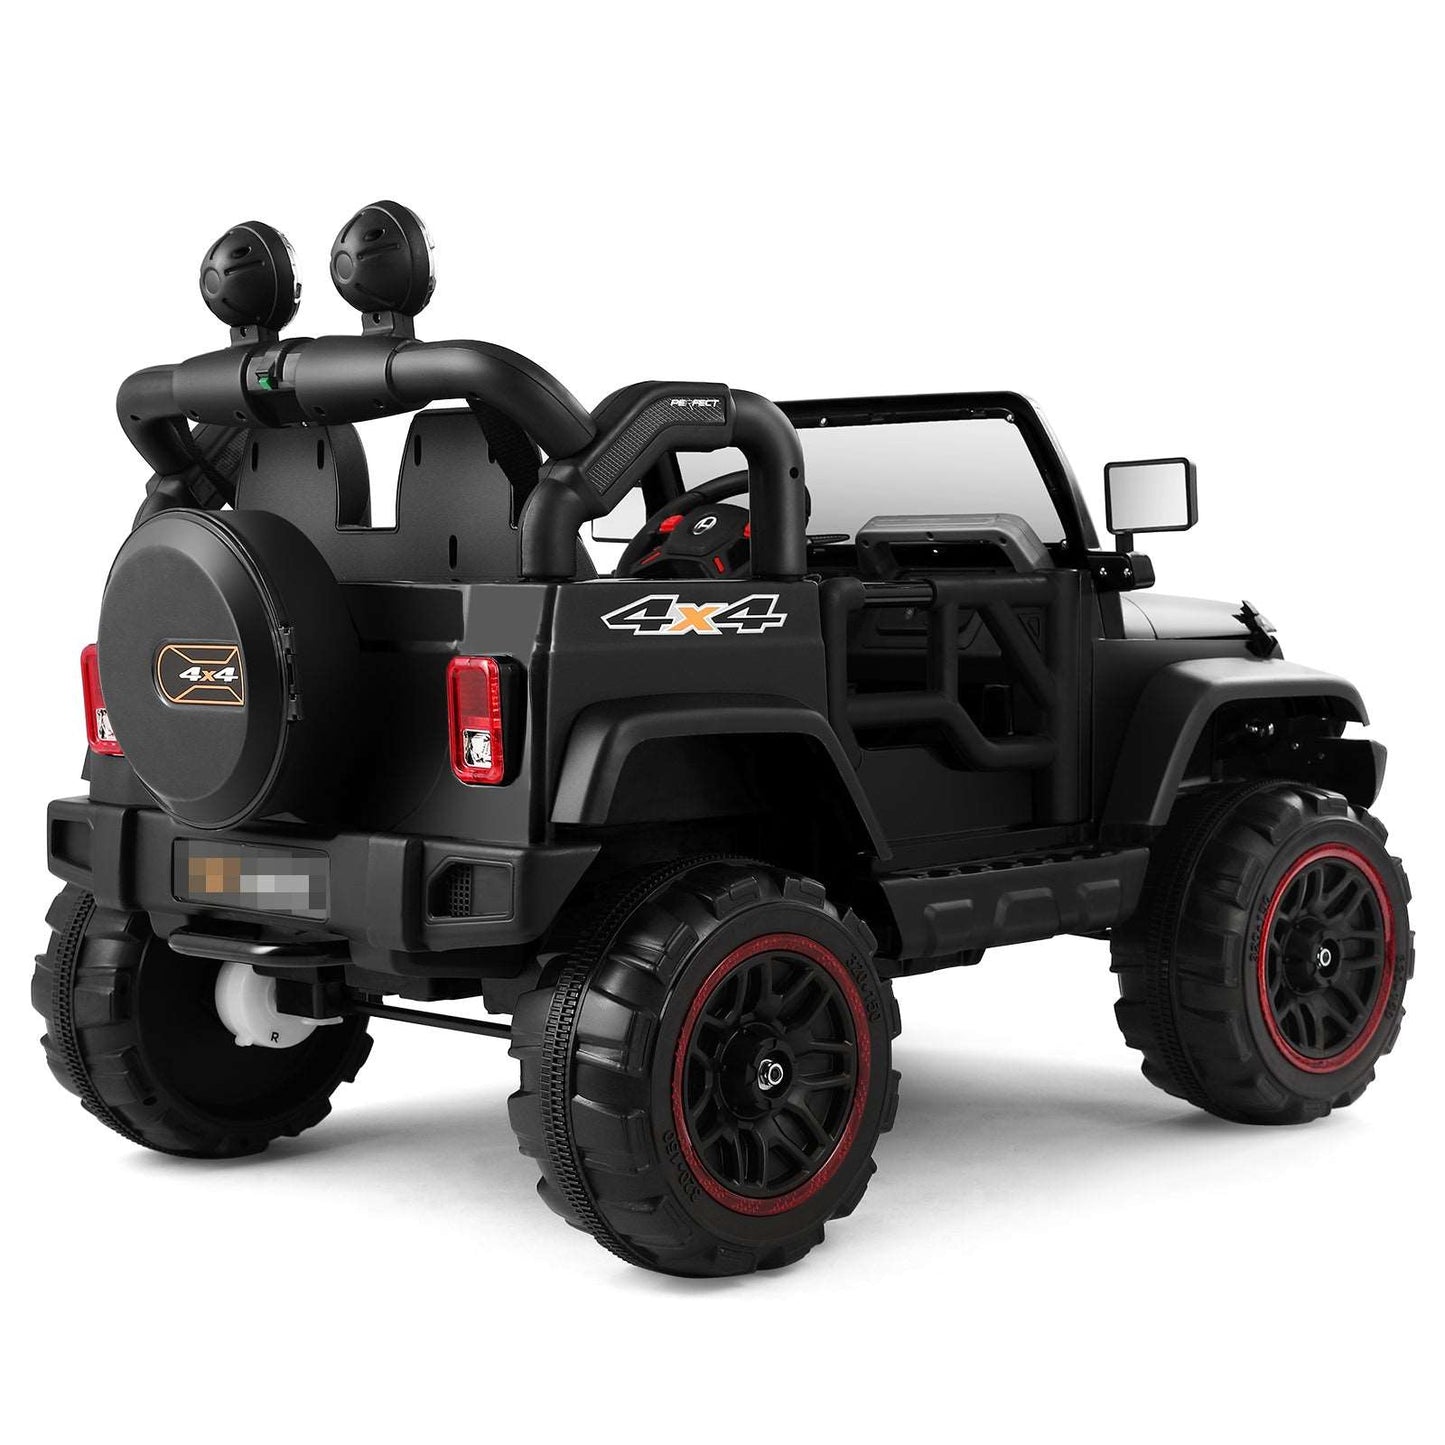 12V Battery Kids Ride on Truck Car Toys MP3 LED Light Remote Control+Cover Black